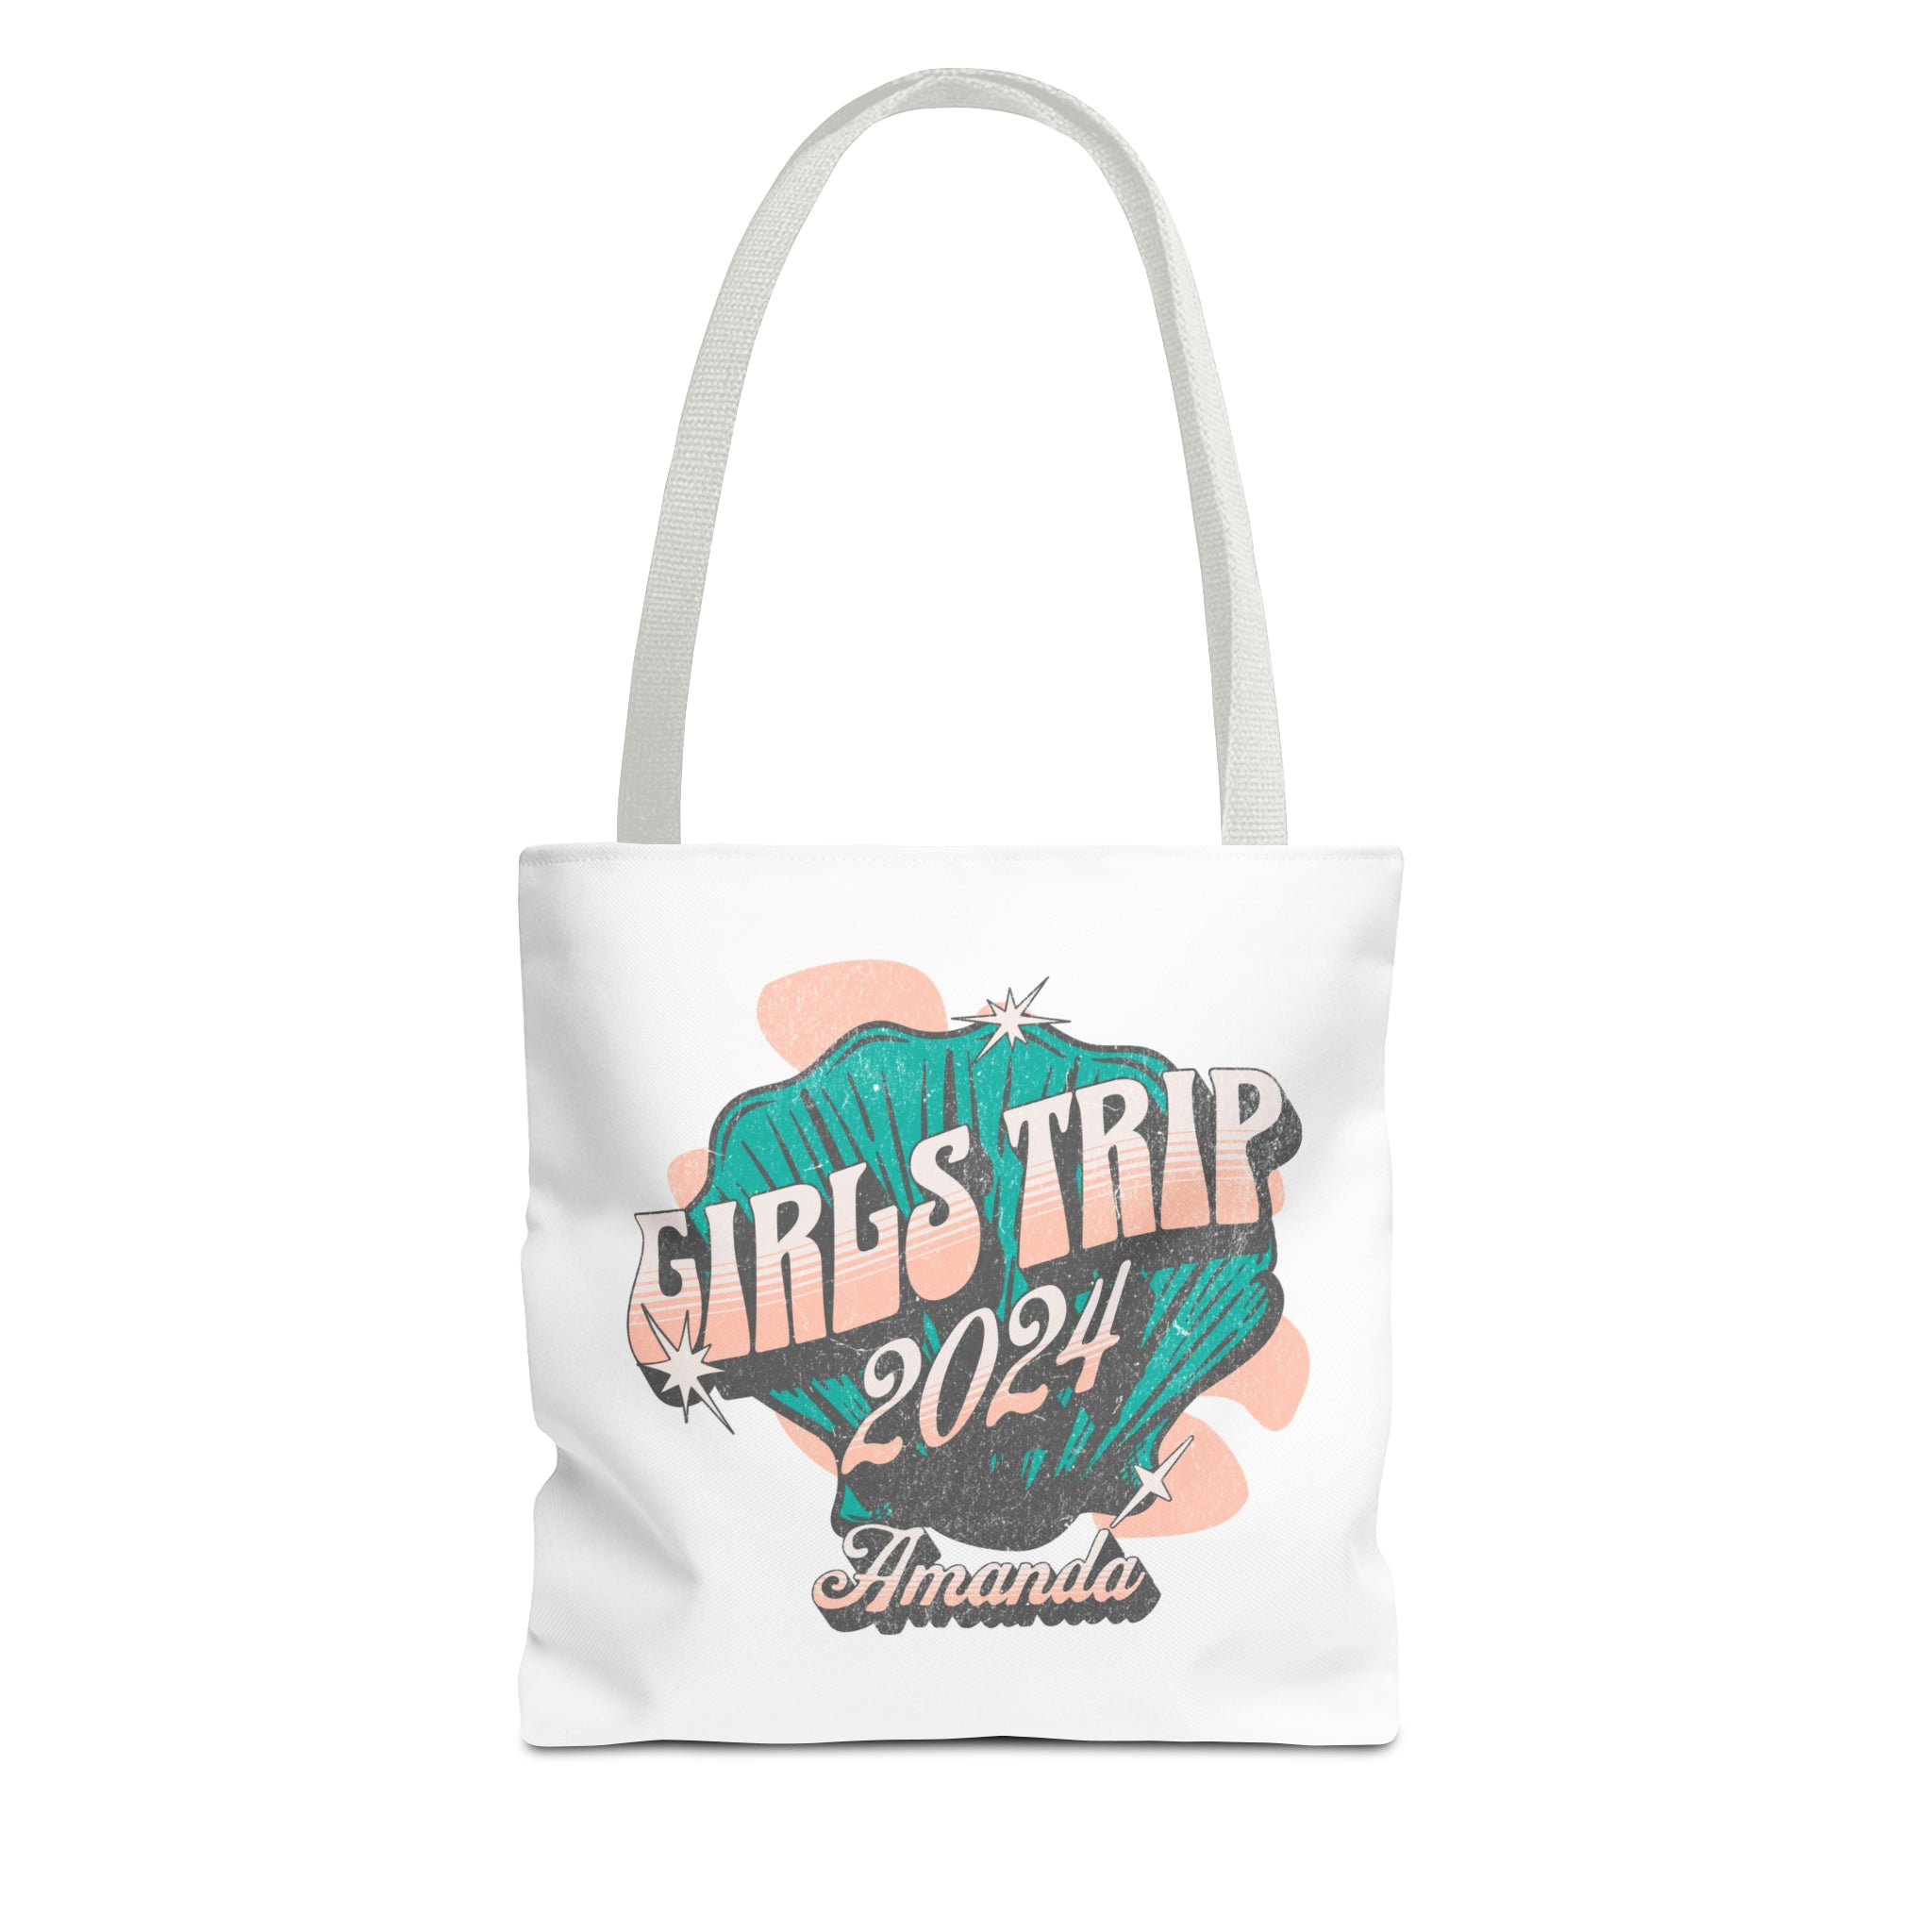 Shell Girls Trip Tote Bag